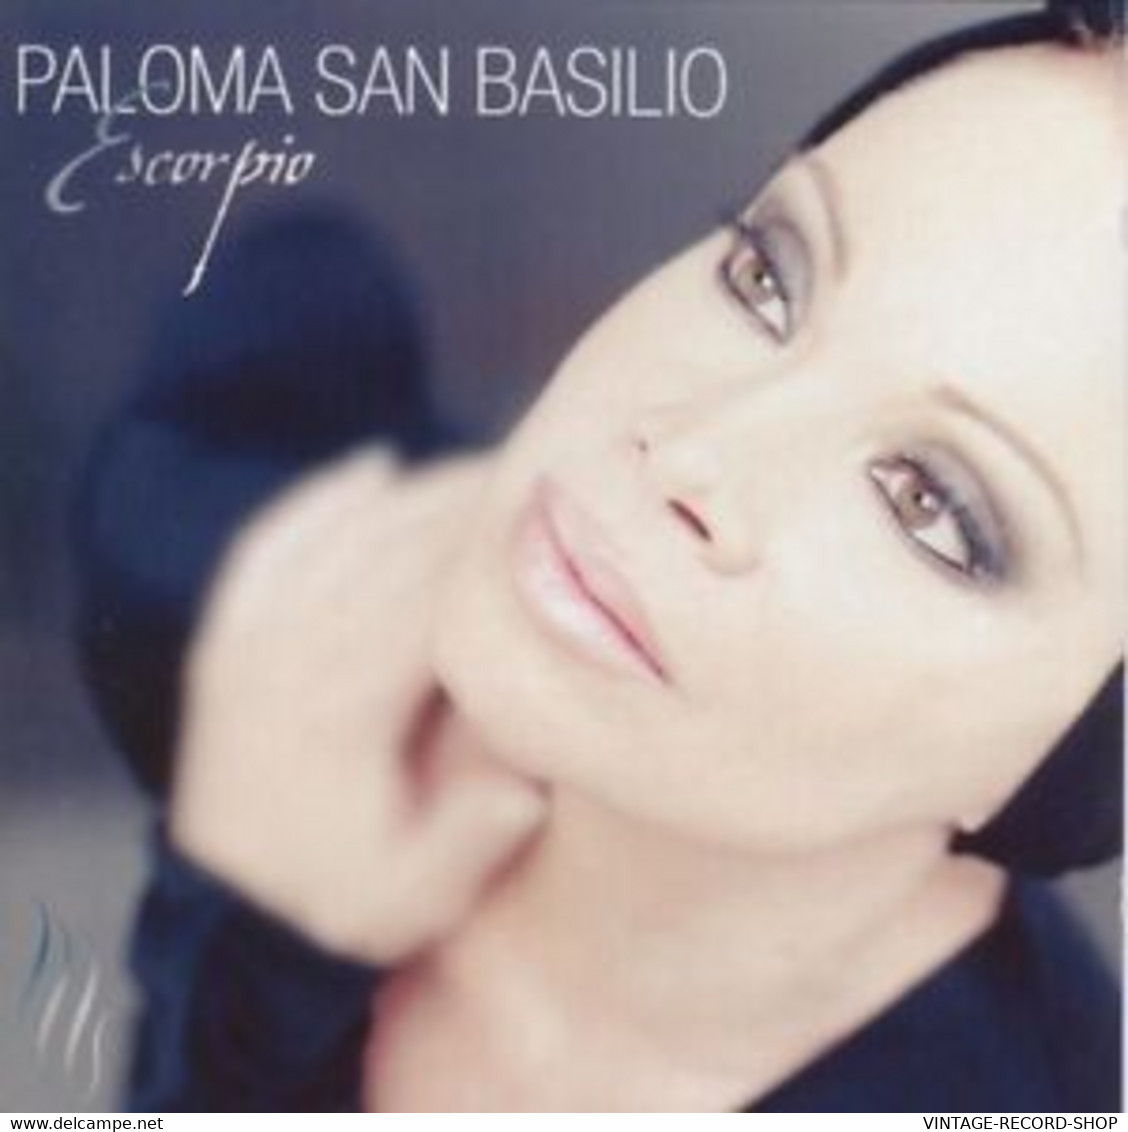 CD PALOMA SAN BASILIO *ESCORPIO* - Other - Spanish Music